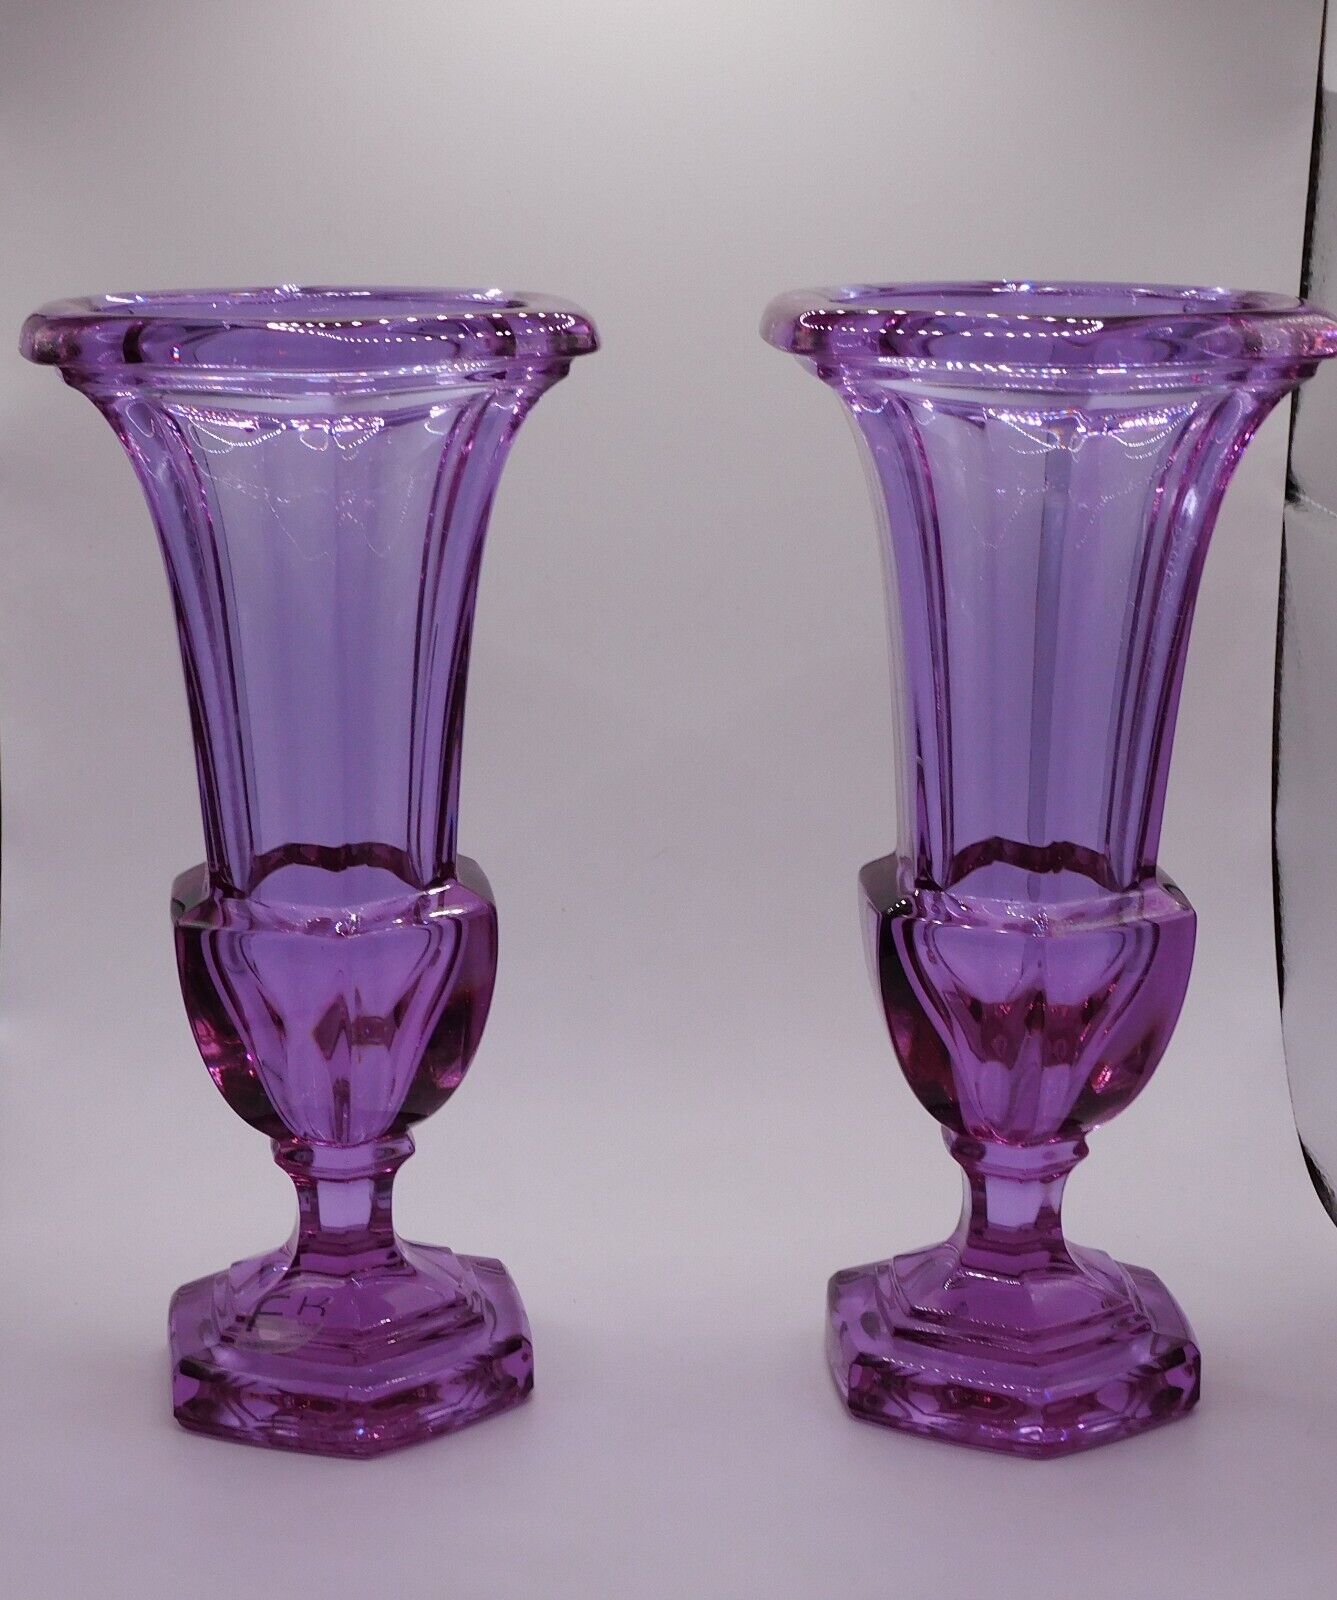 Friedrich Kristall Germany Neodymium 24% lead crystal vases vintage